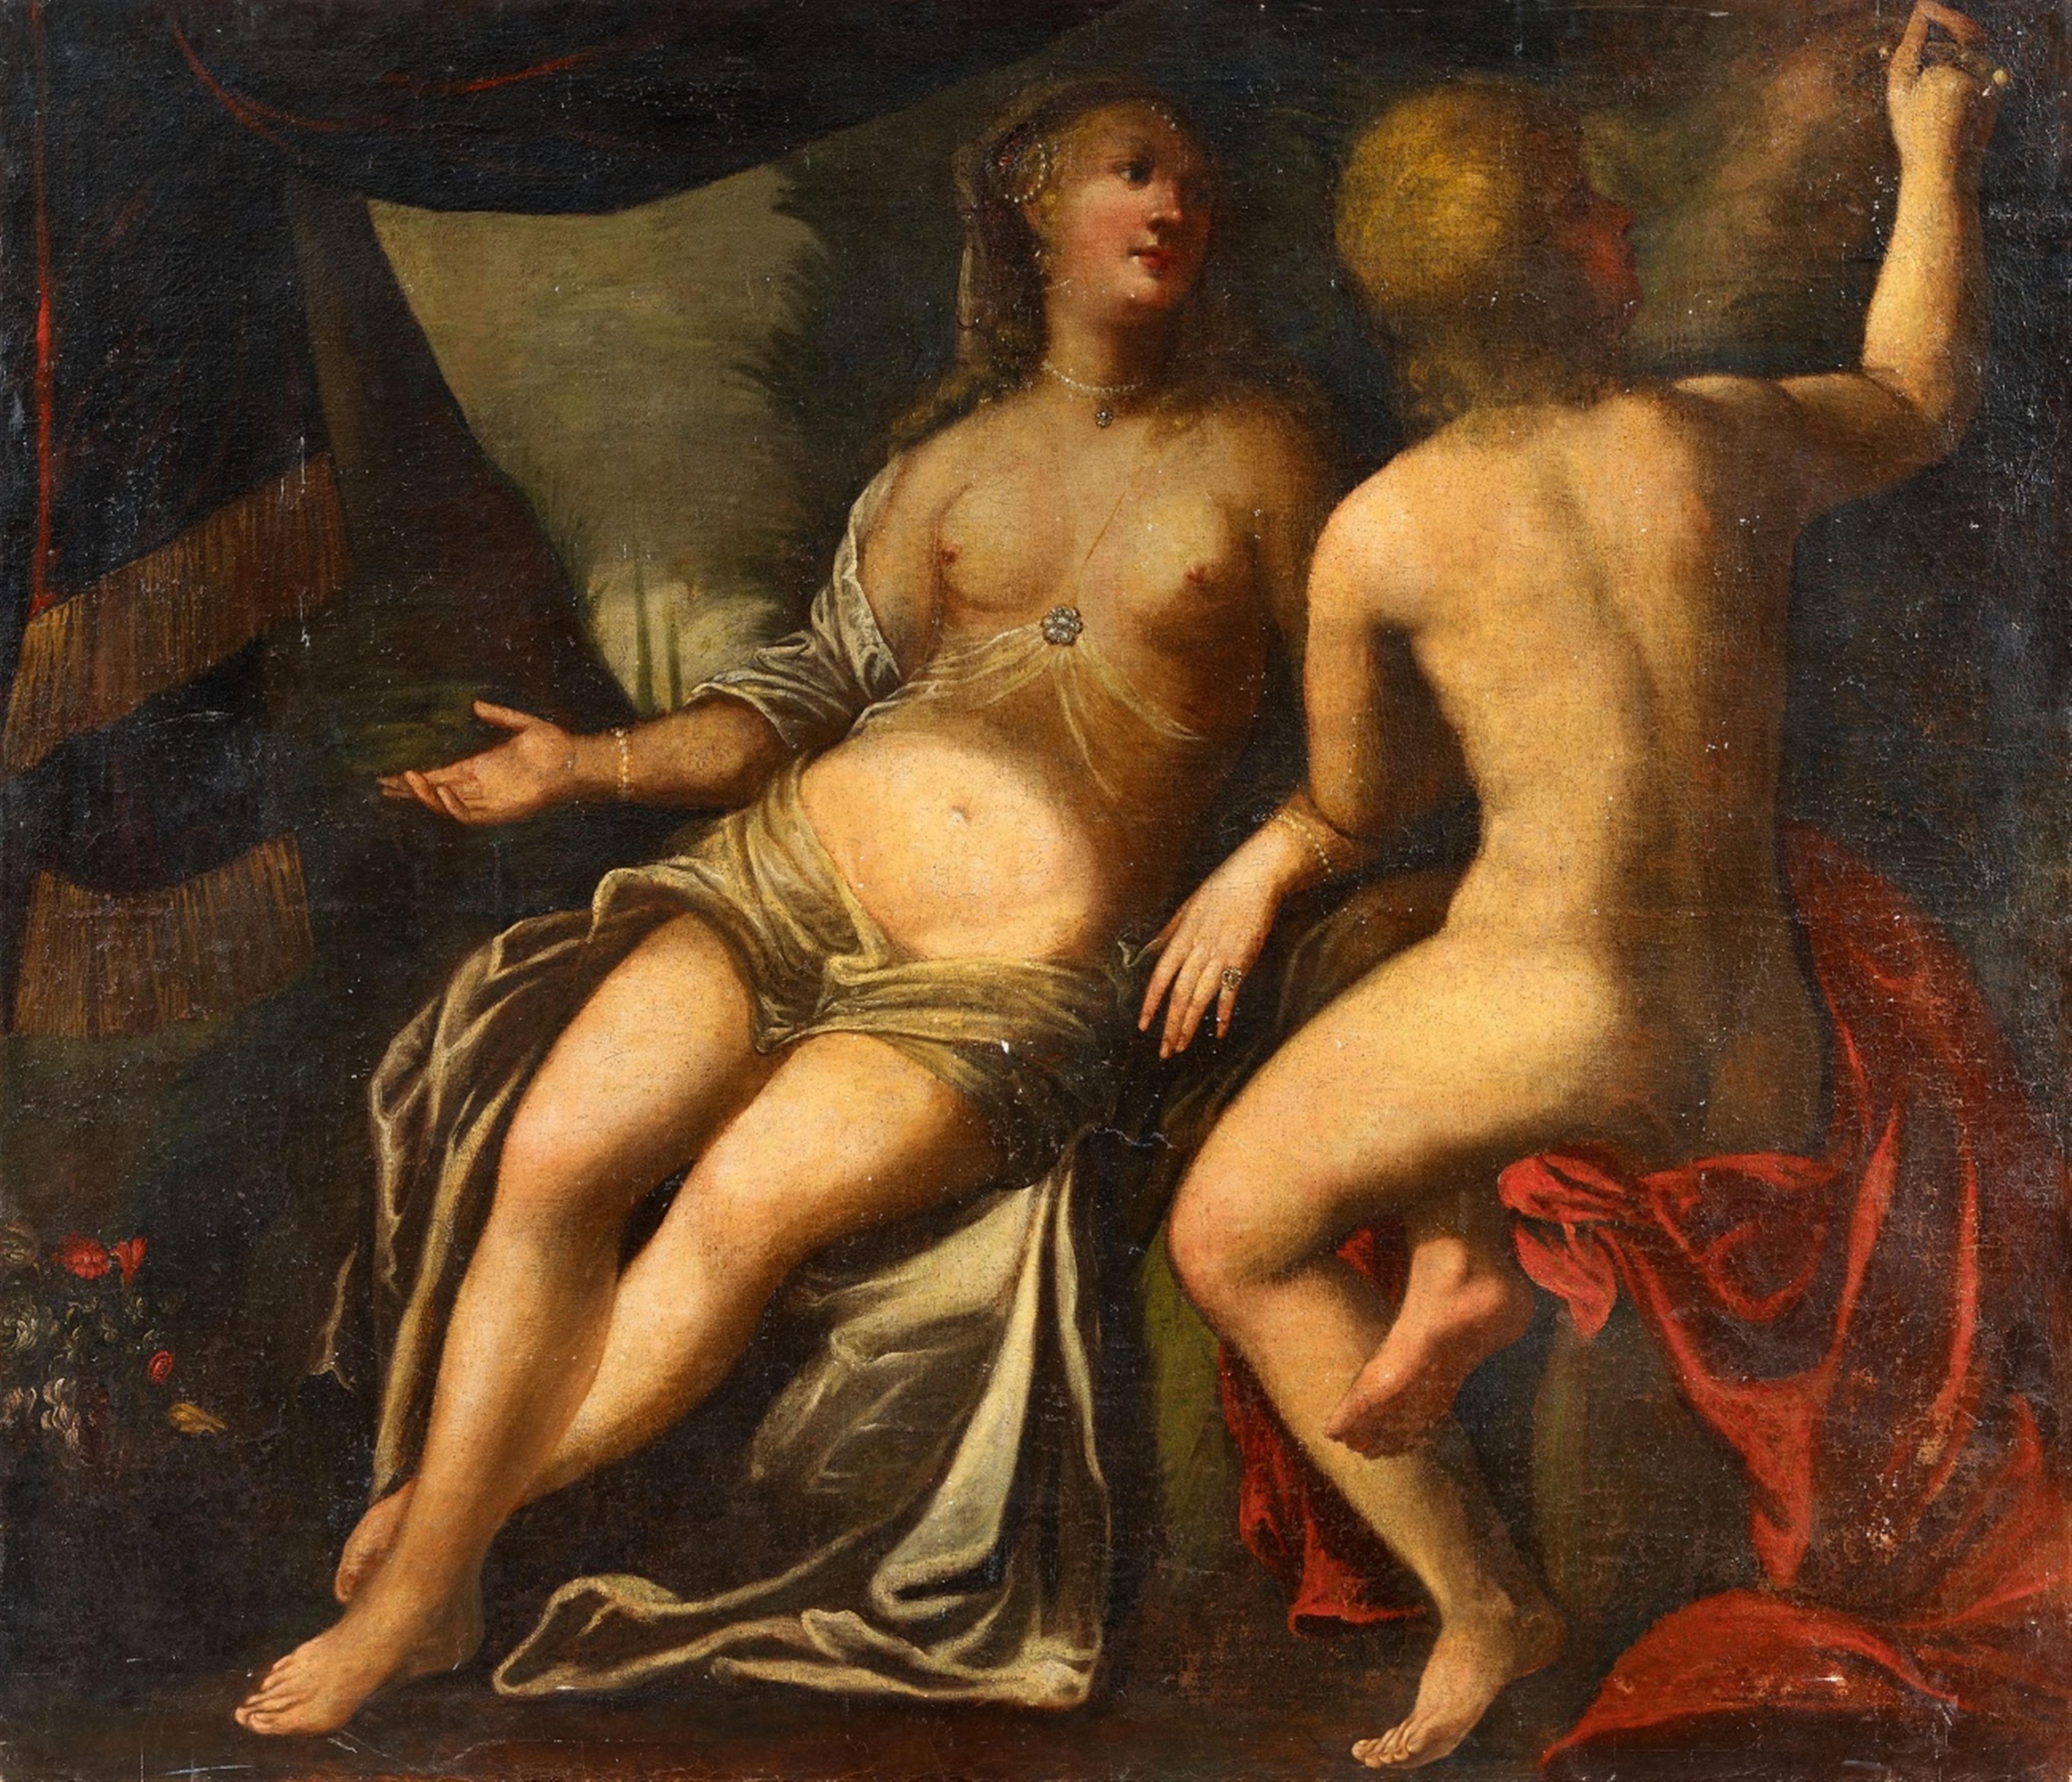 Maffeo Verona, attributed to - Angelica and Medoro - image-1